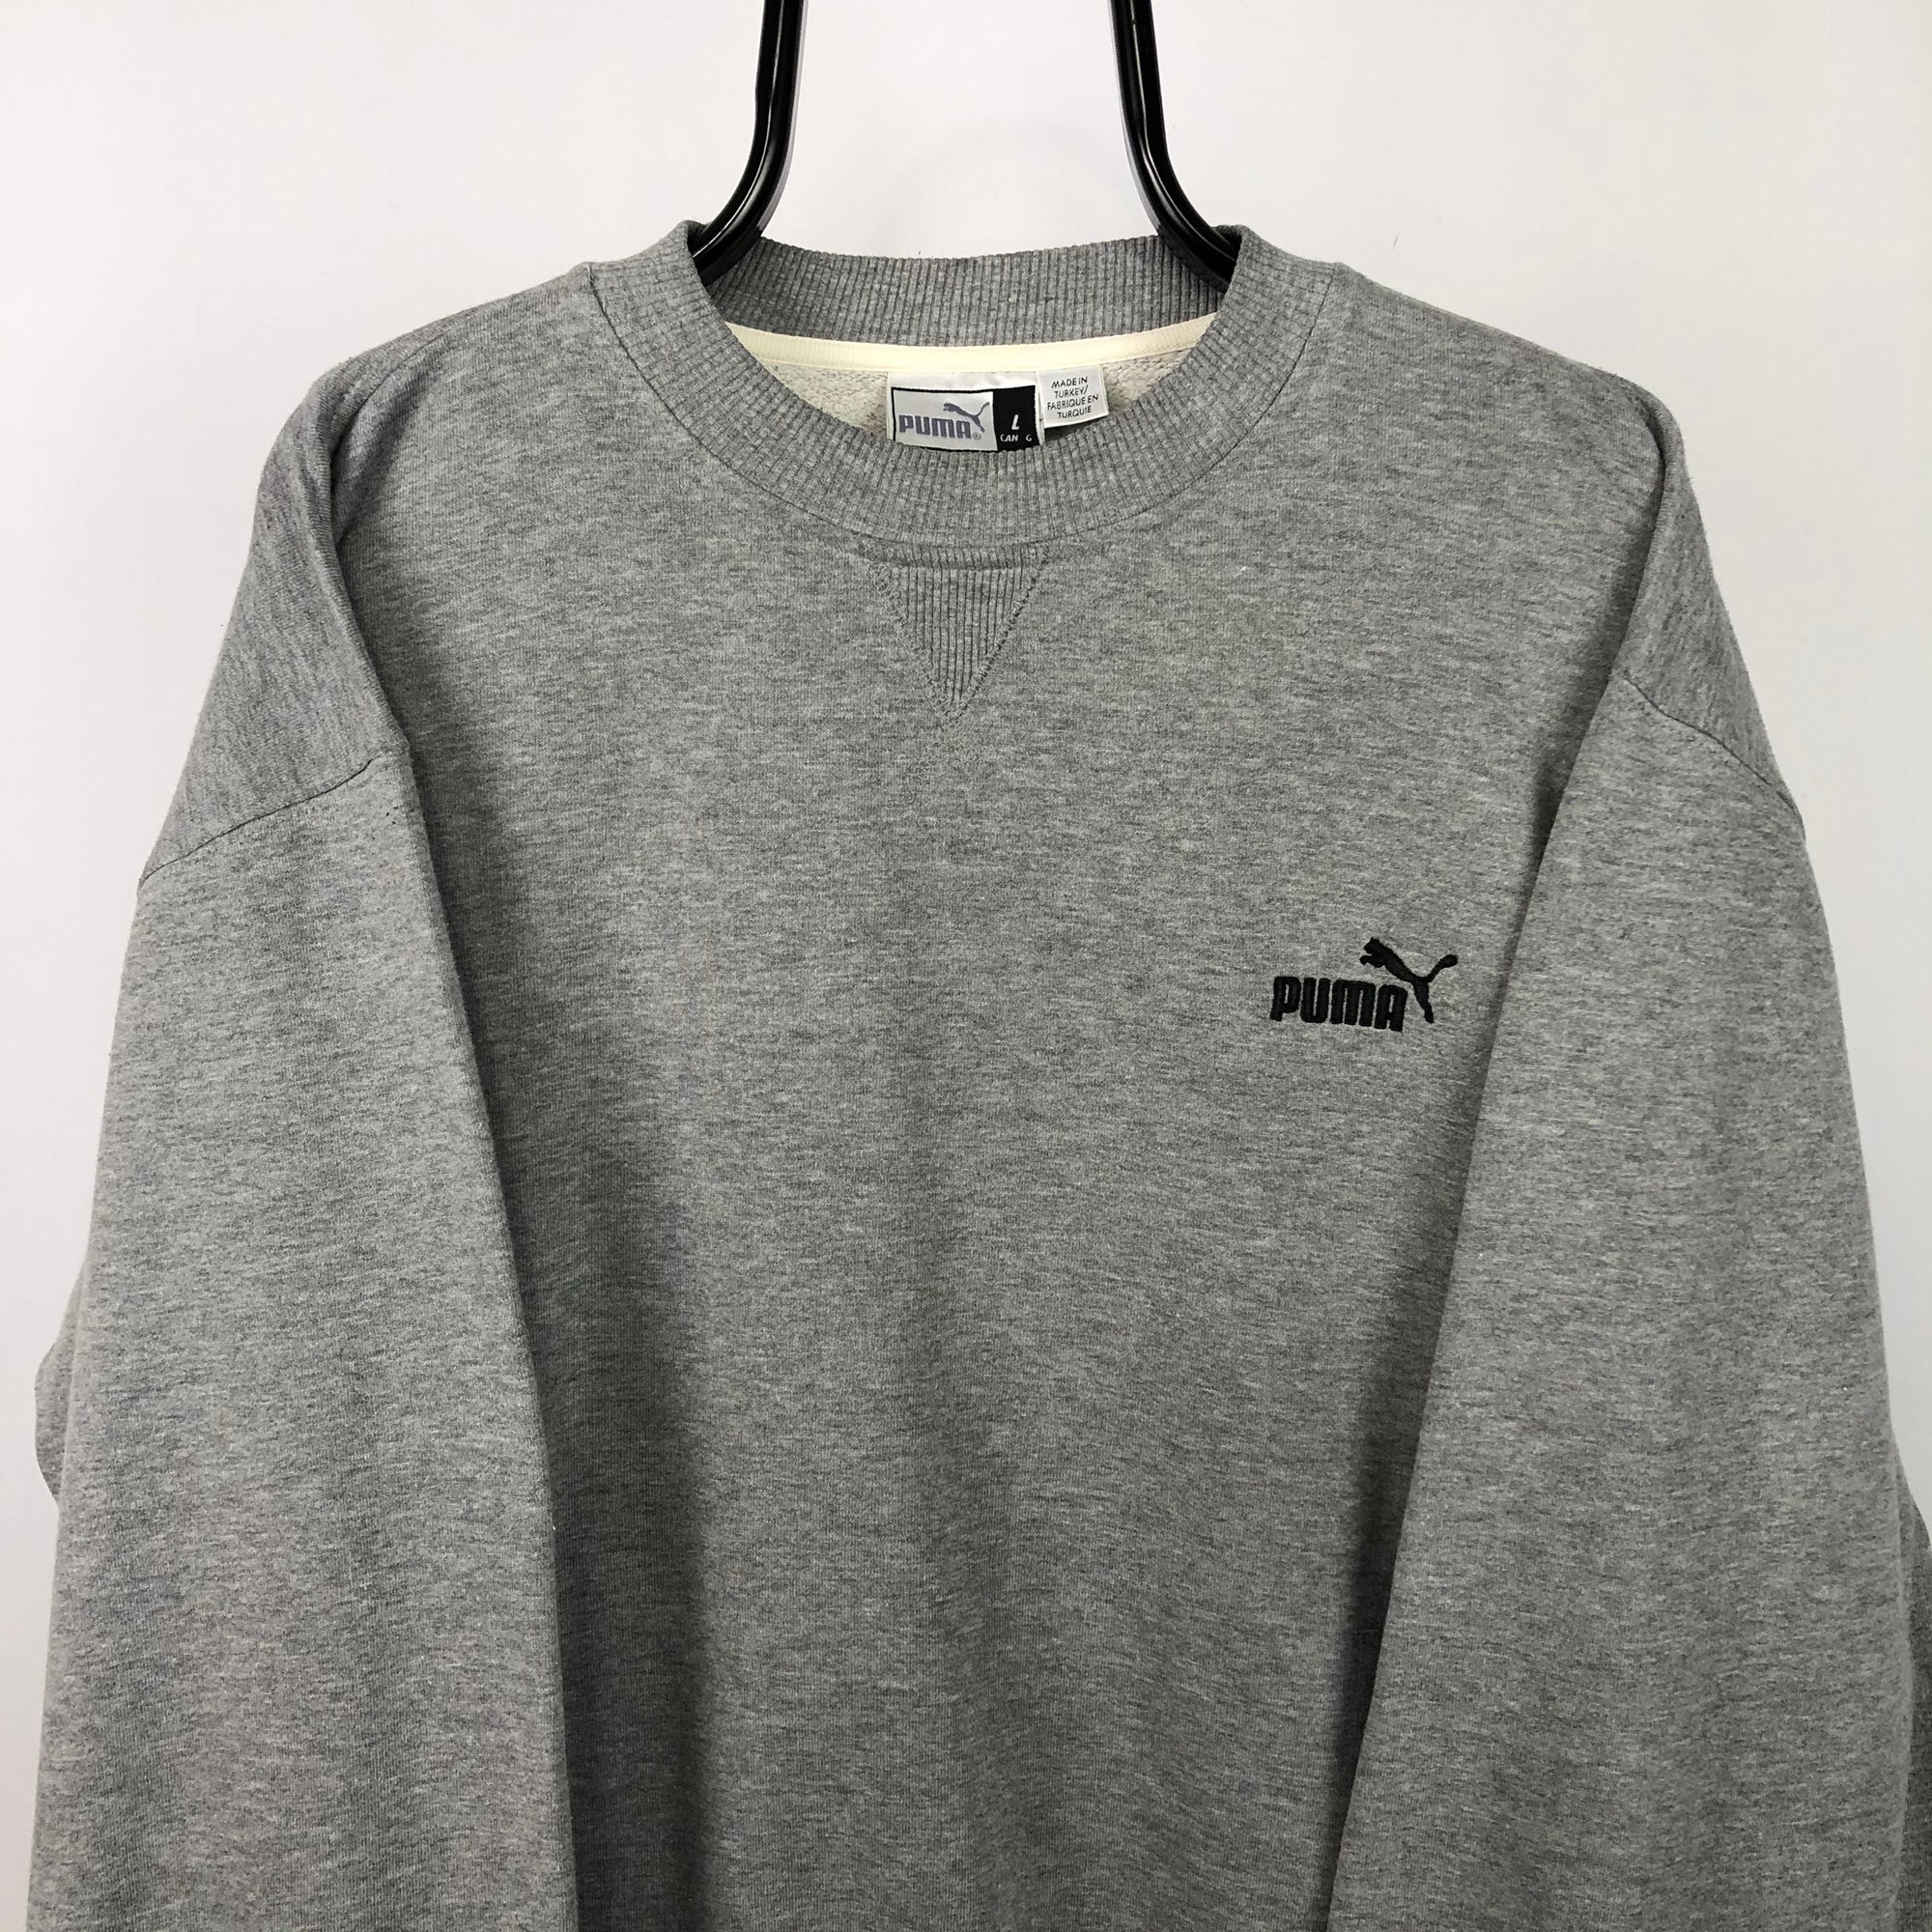 Vintage Puma Embroidered Small Logo Sweatshirt in Grey - Men's XL/Women's XXL